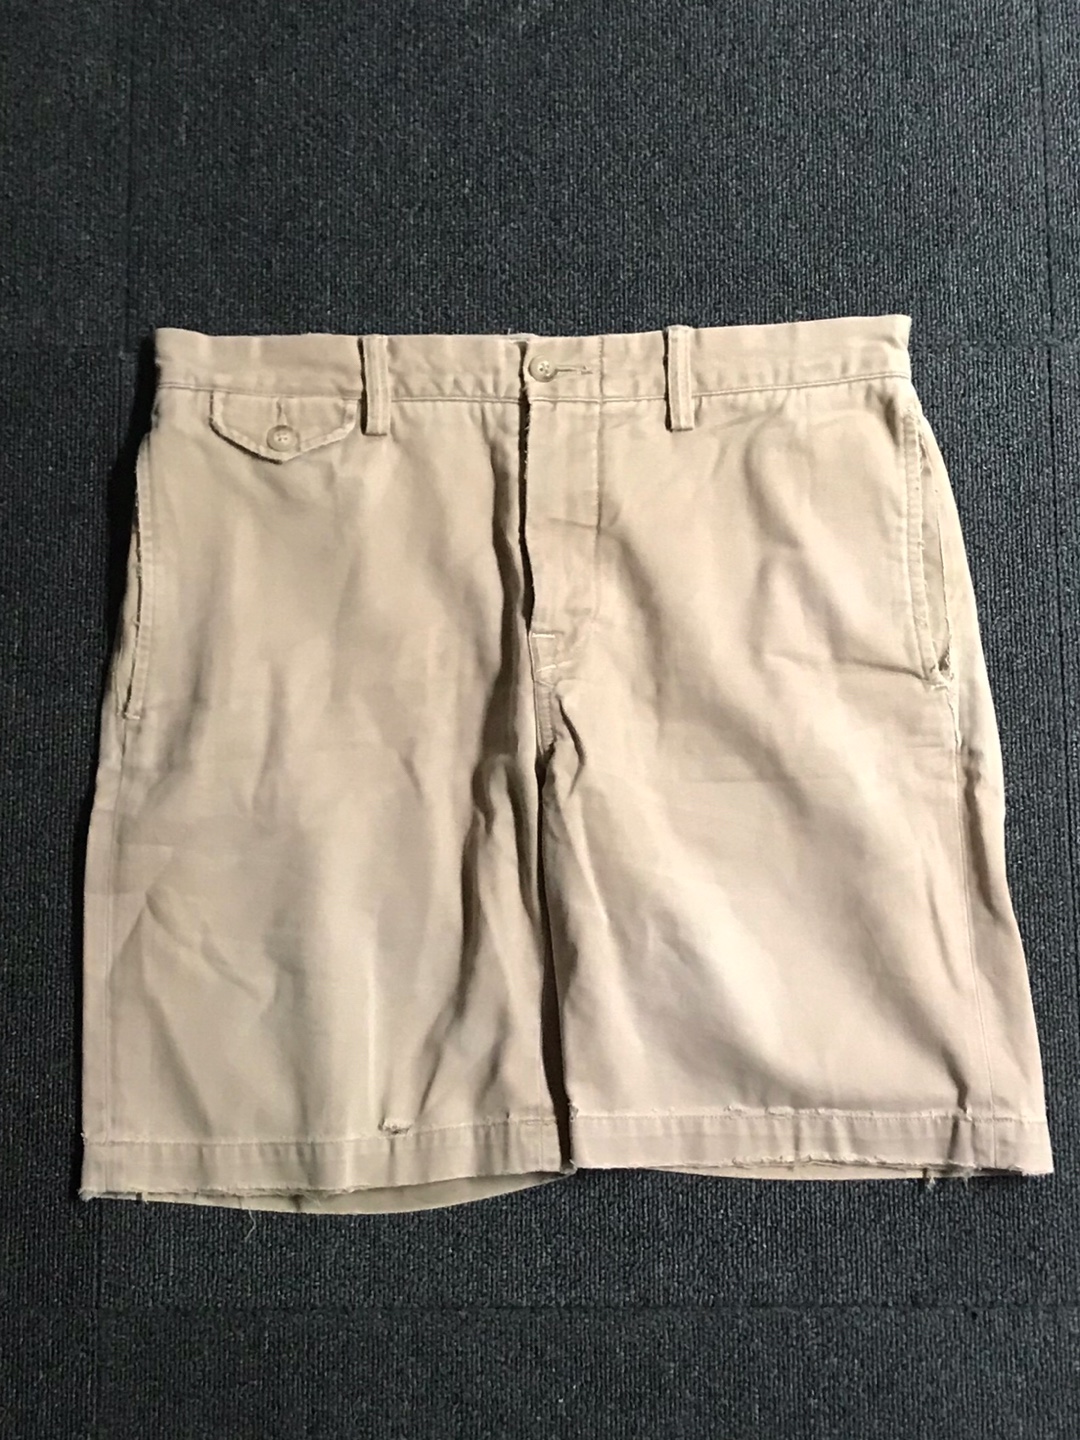 Polo RL distressed chino shorts (30 size, ~31인치 추천)